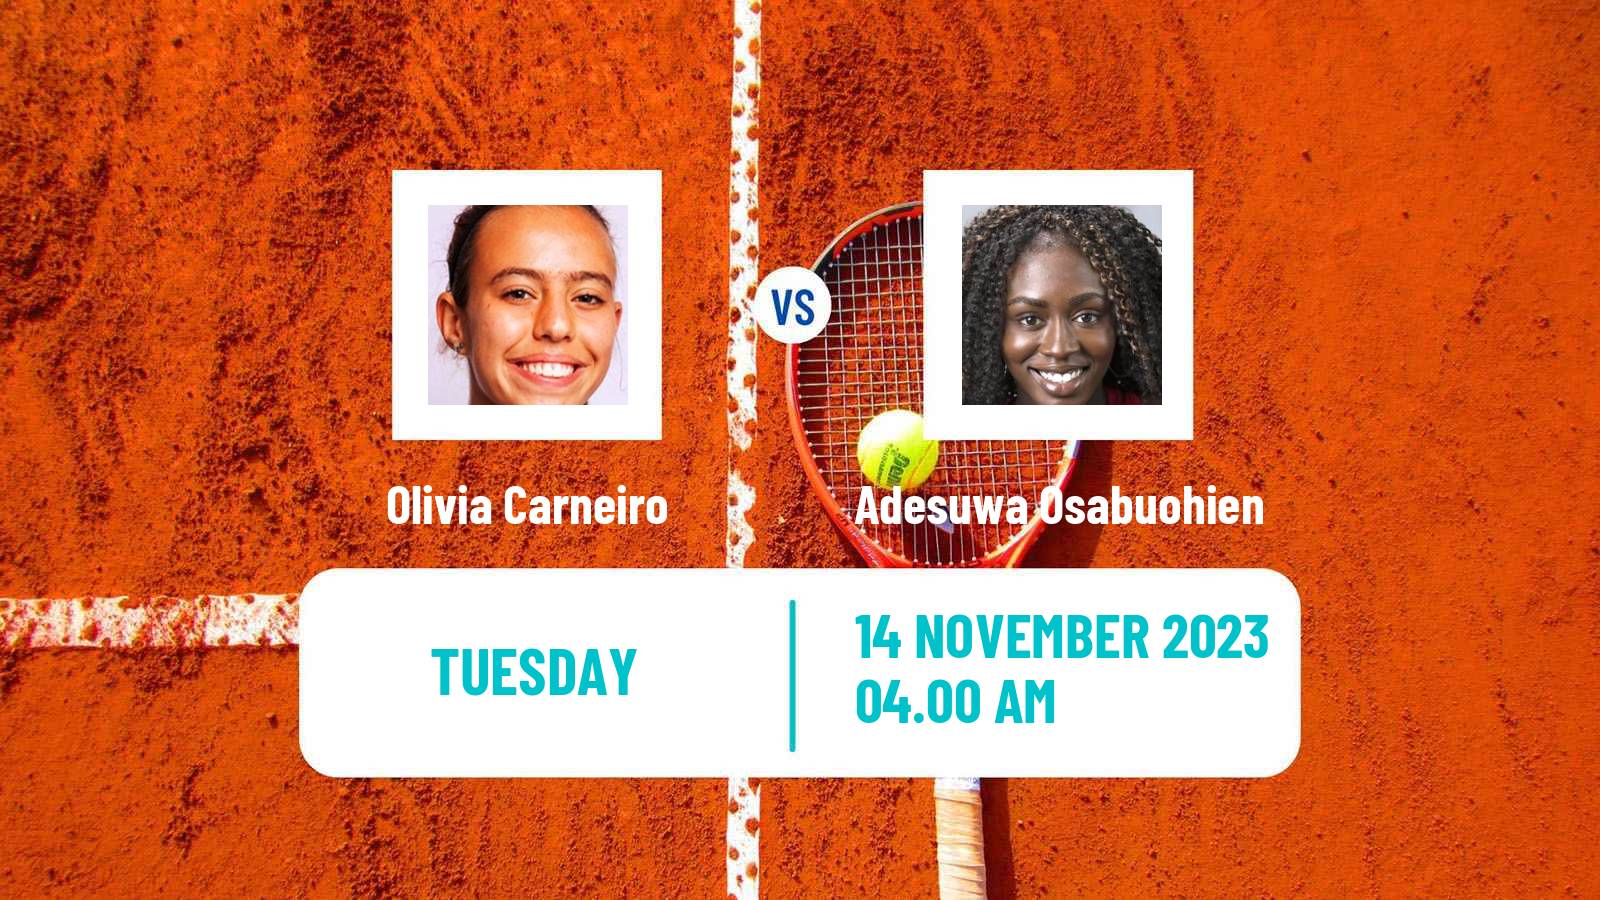 Tennis ITF W15 Monastir 40 Women 2023 Olivia Carneiro - Adesuwa Osabuohien